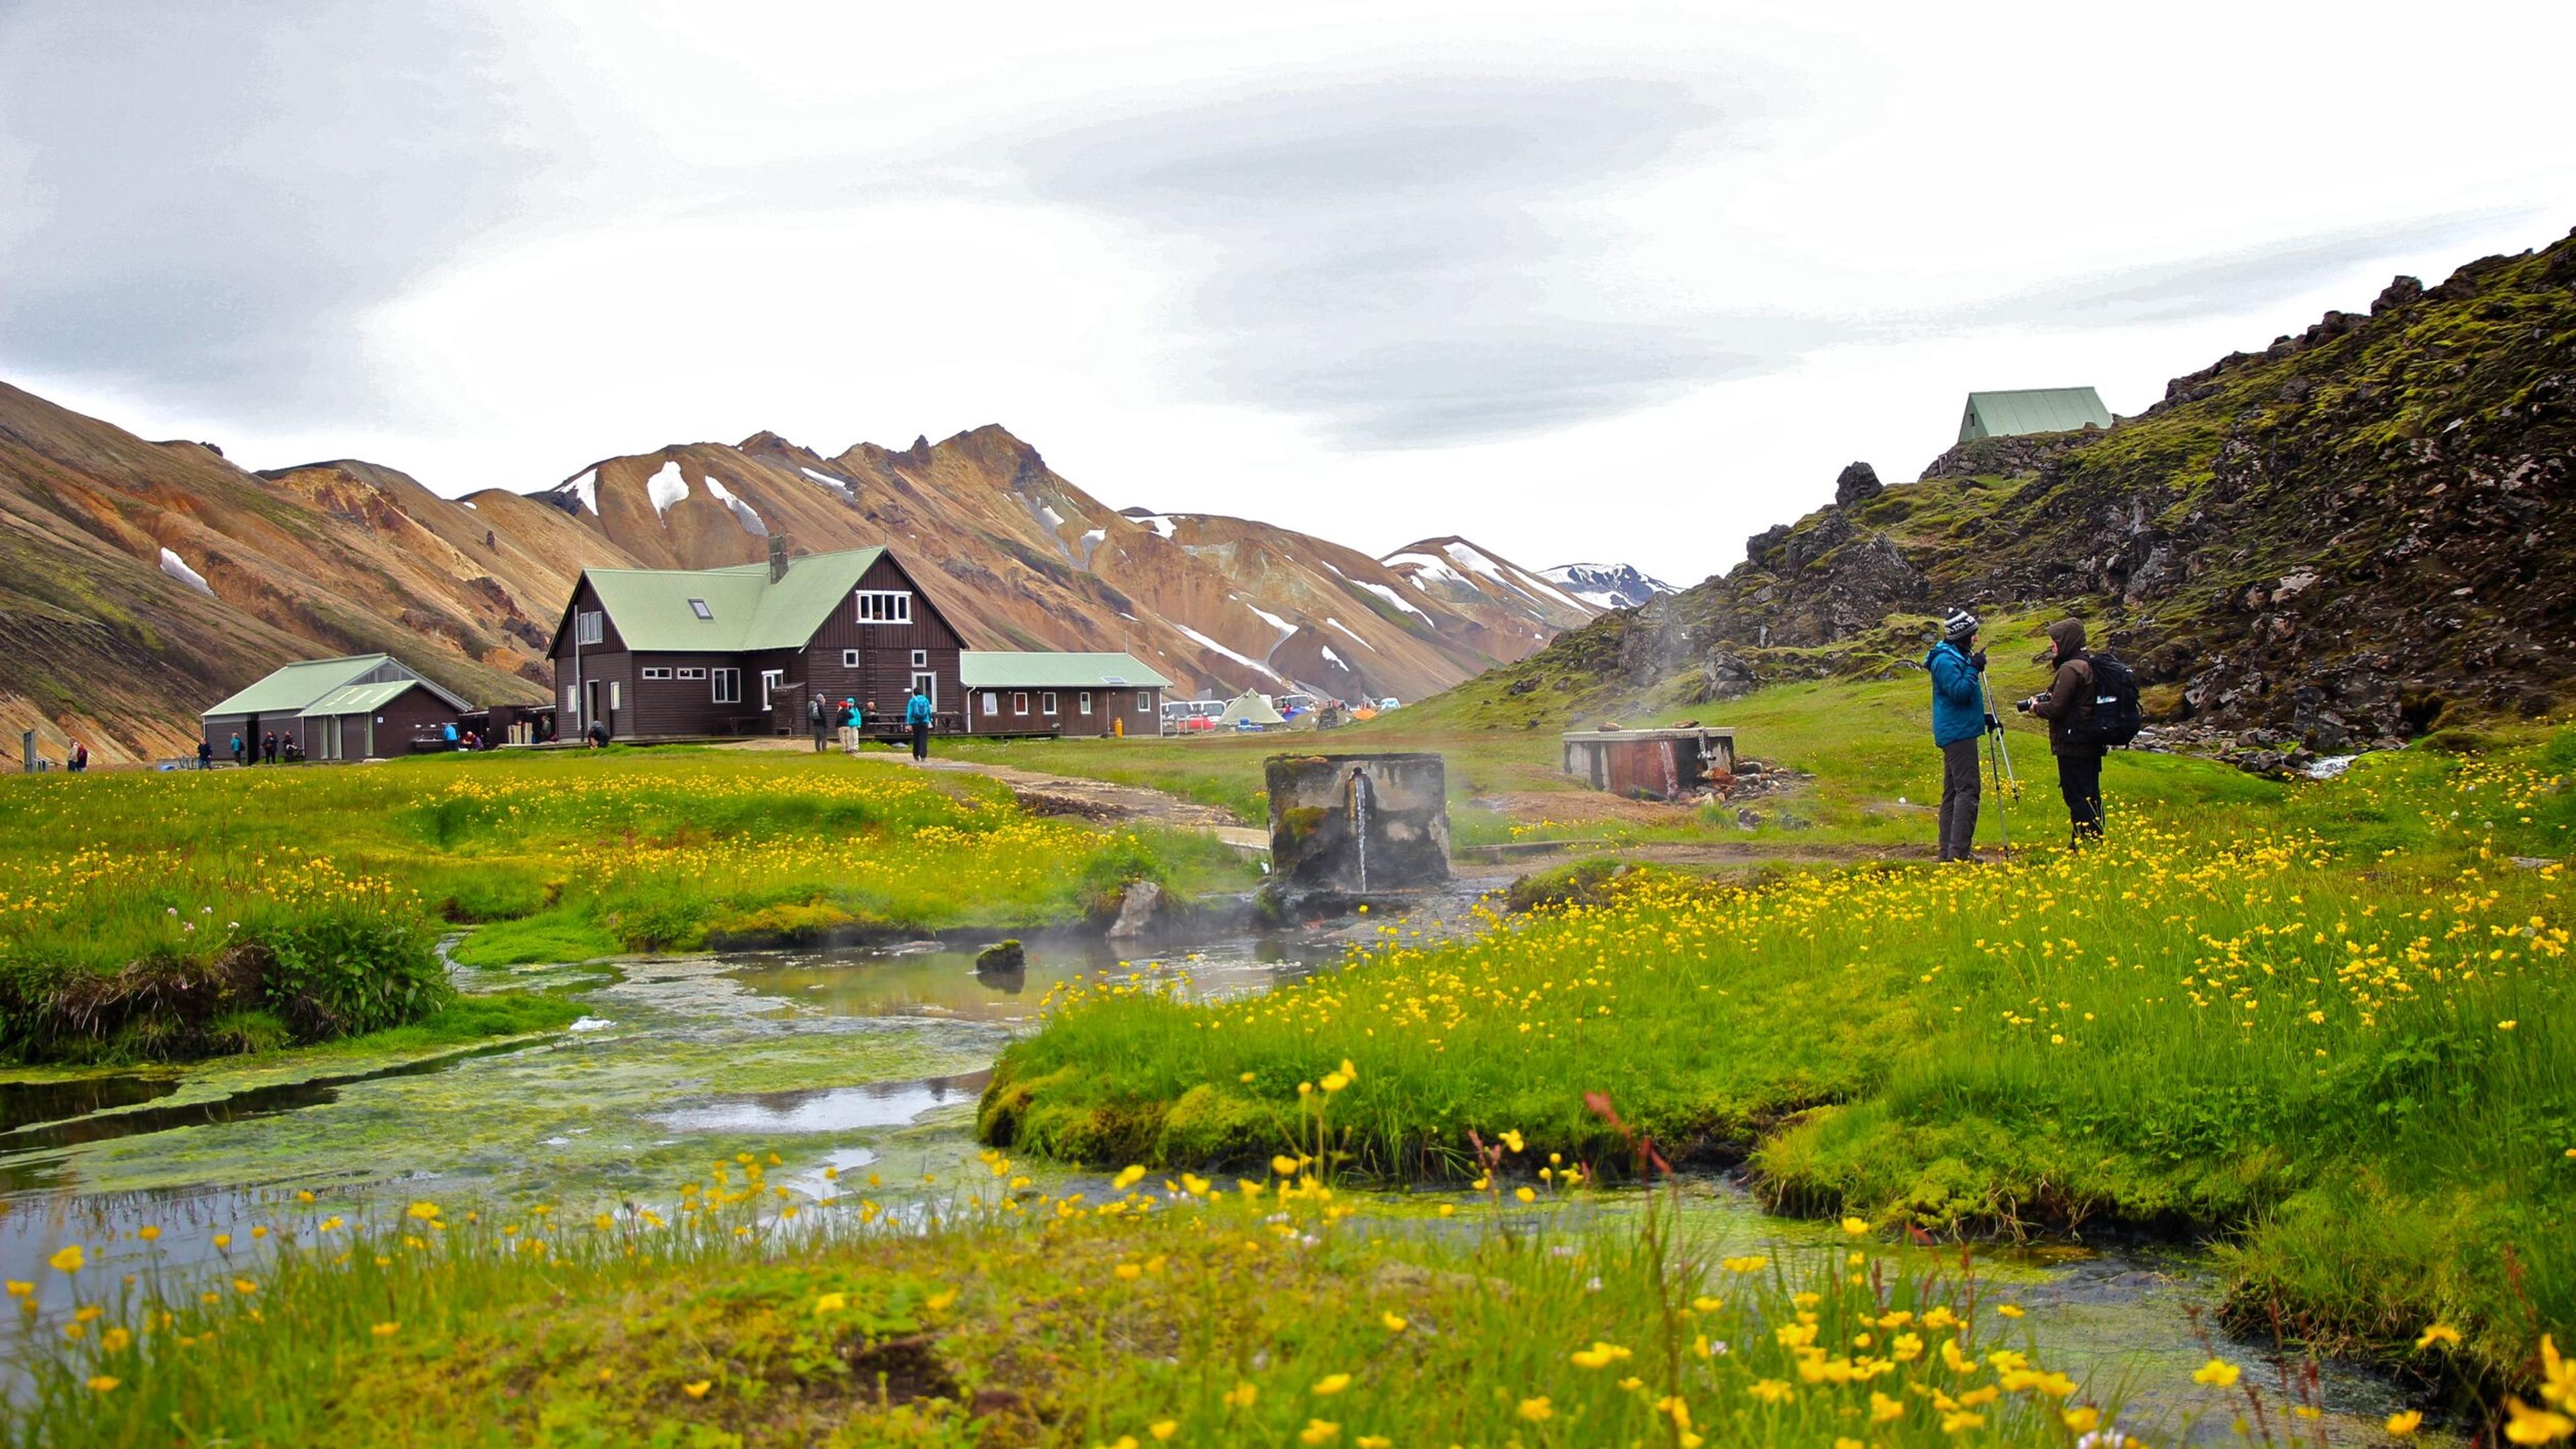 Landamannalaugar hotspring and huts in the Icelandic Highlands